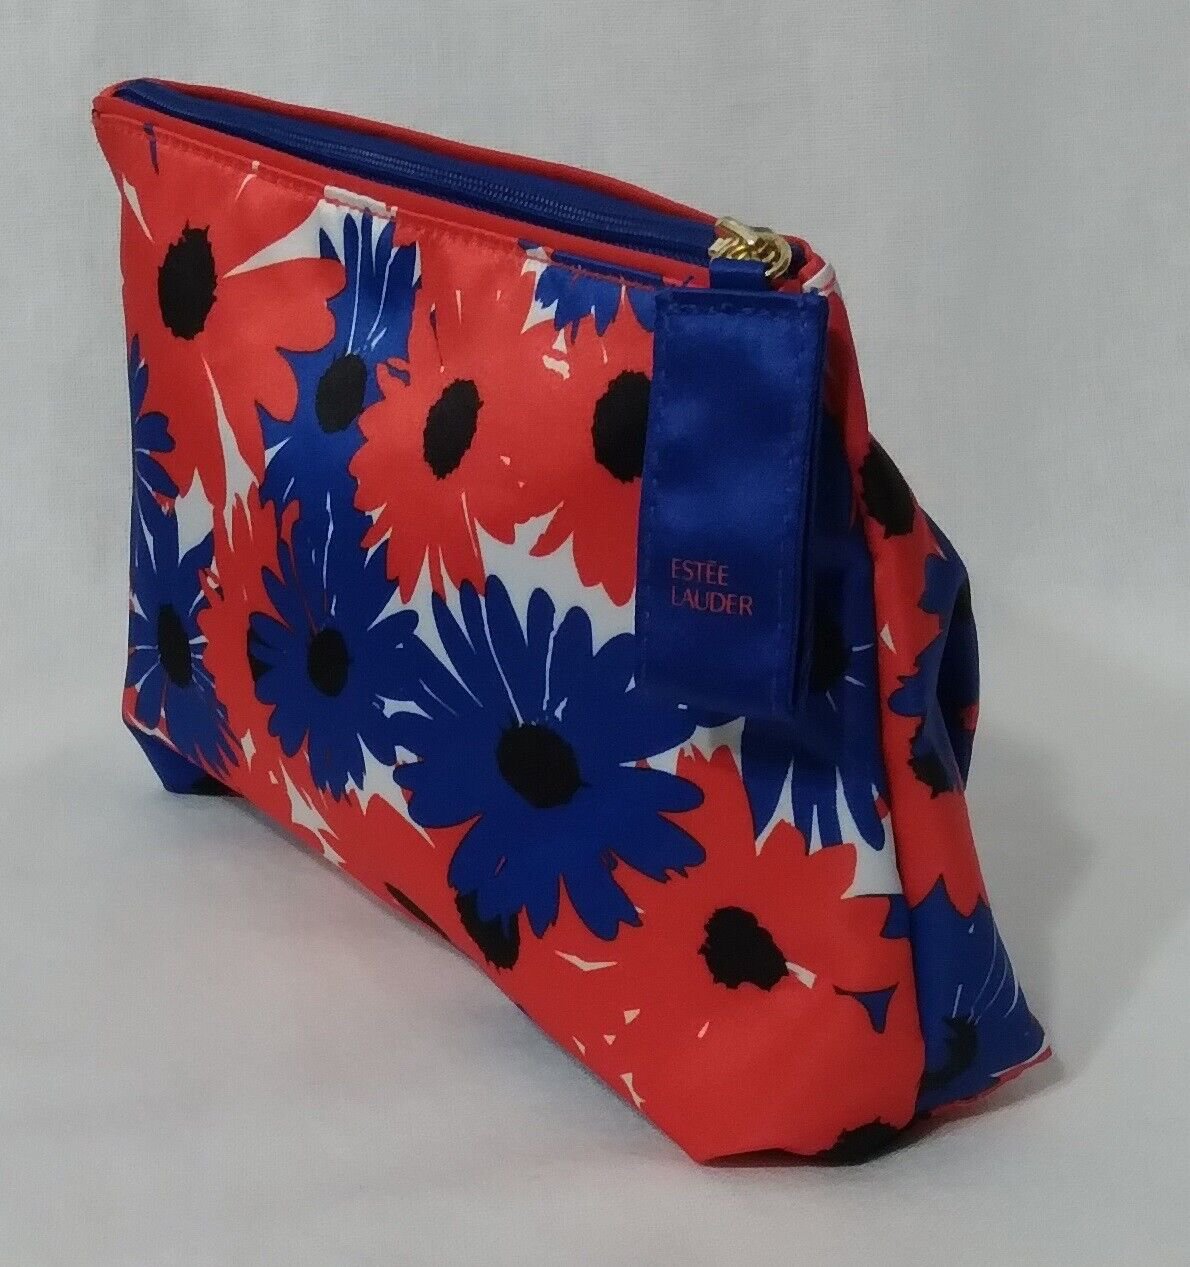 Estee Lauder Cosmetic Makeup Bag Red Blue Flowers Floral Travel Case Pouch